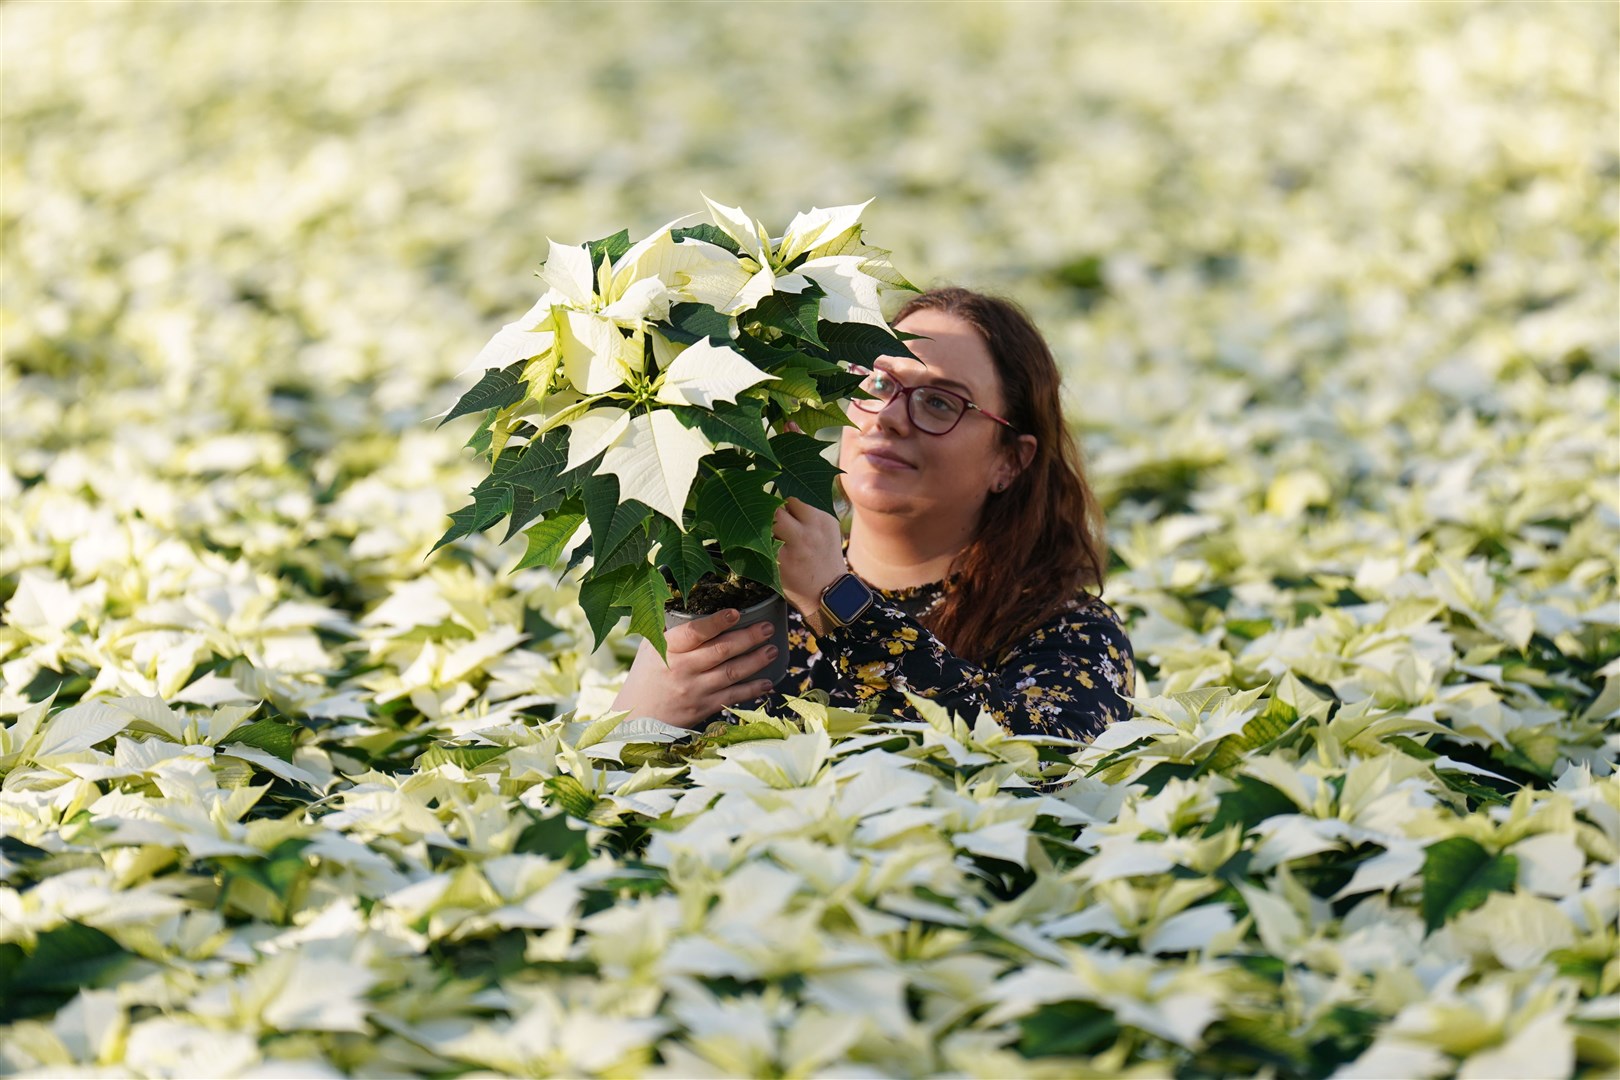 Monika Dratwicka inspects a crop of new white ‘Alaska’ poinsettias at Bridge Farm Group in Spalding, Lincolnshire. (Joe Giddens/ PA)